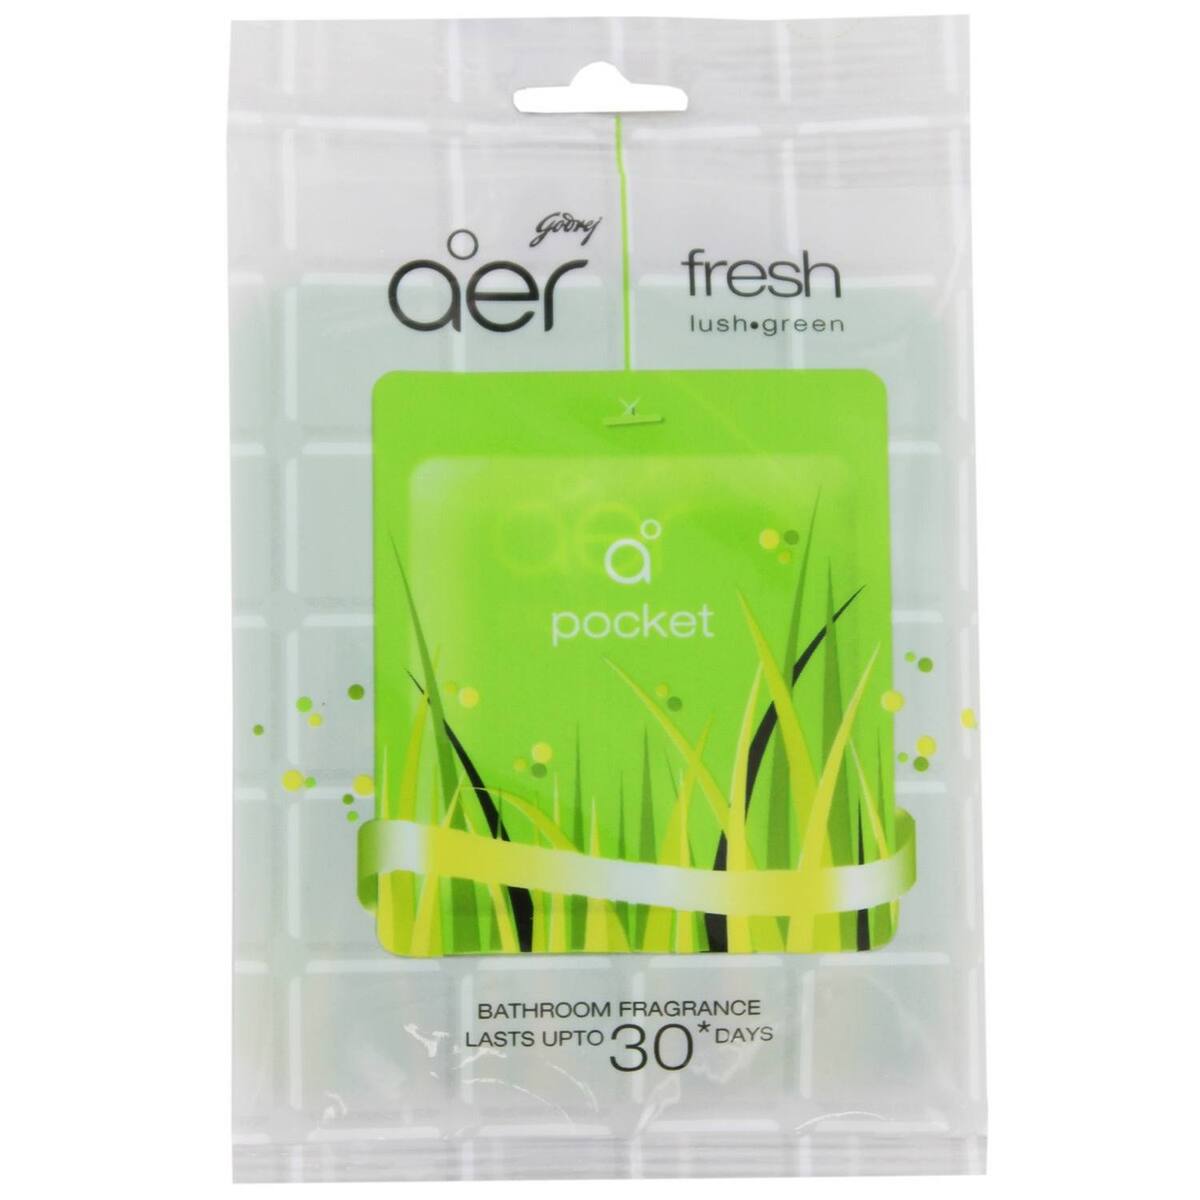 Aer Pocket Bathroom Fragrance Fresh Lushgreen 10g